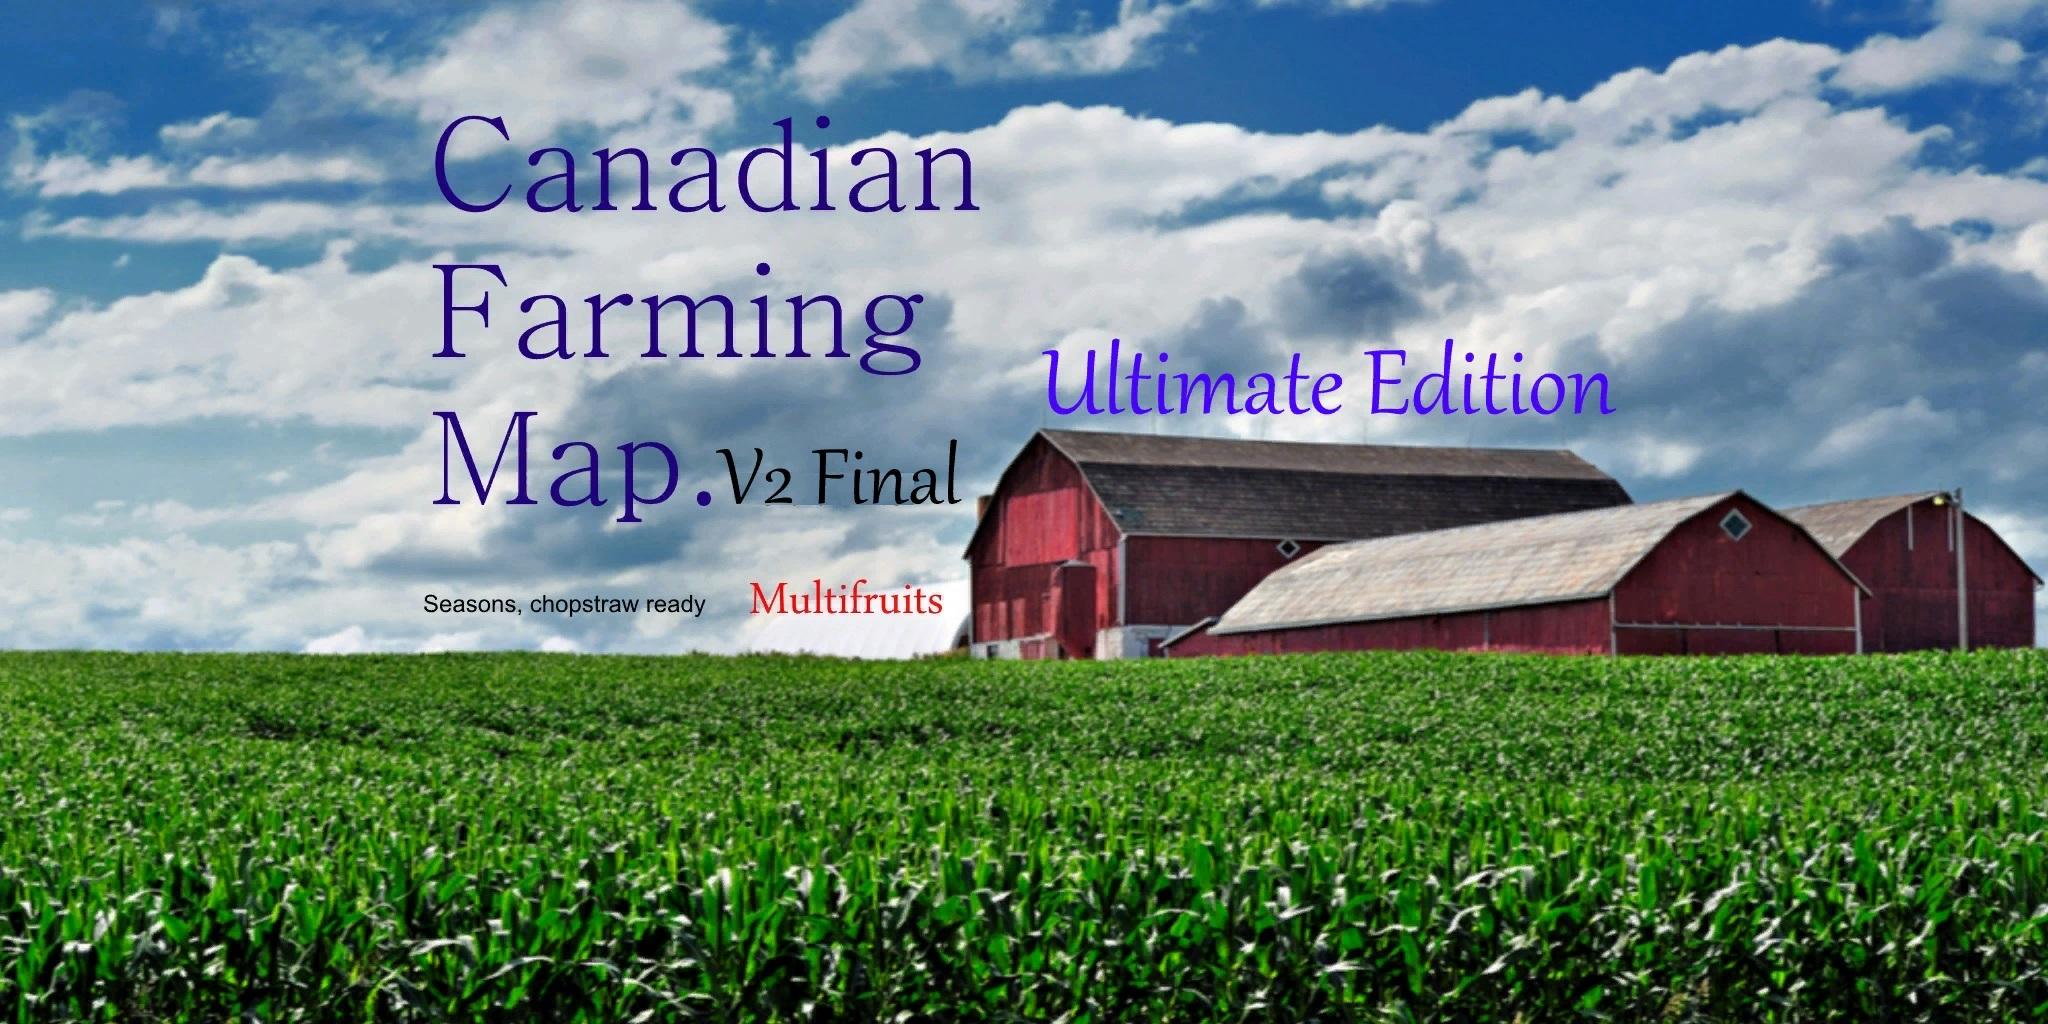 FS17 - Canadian Farming Map Ultimate Edition V2.0 Final